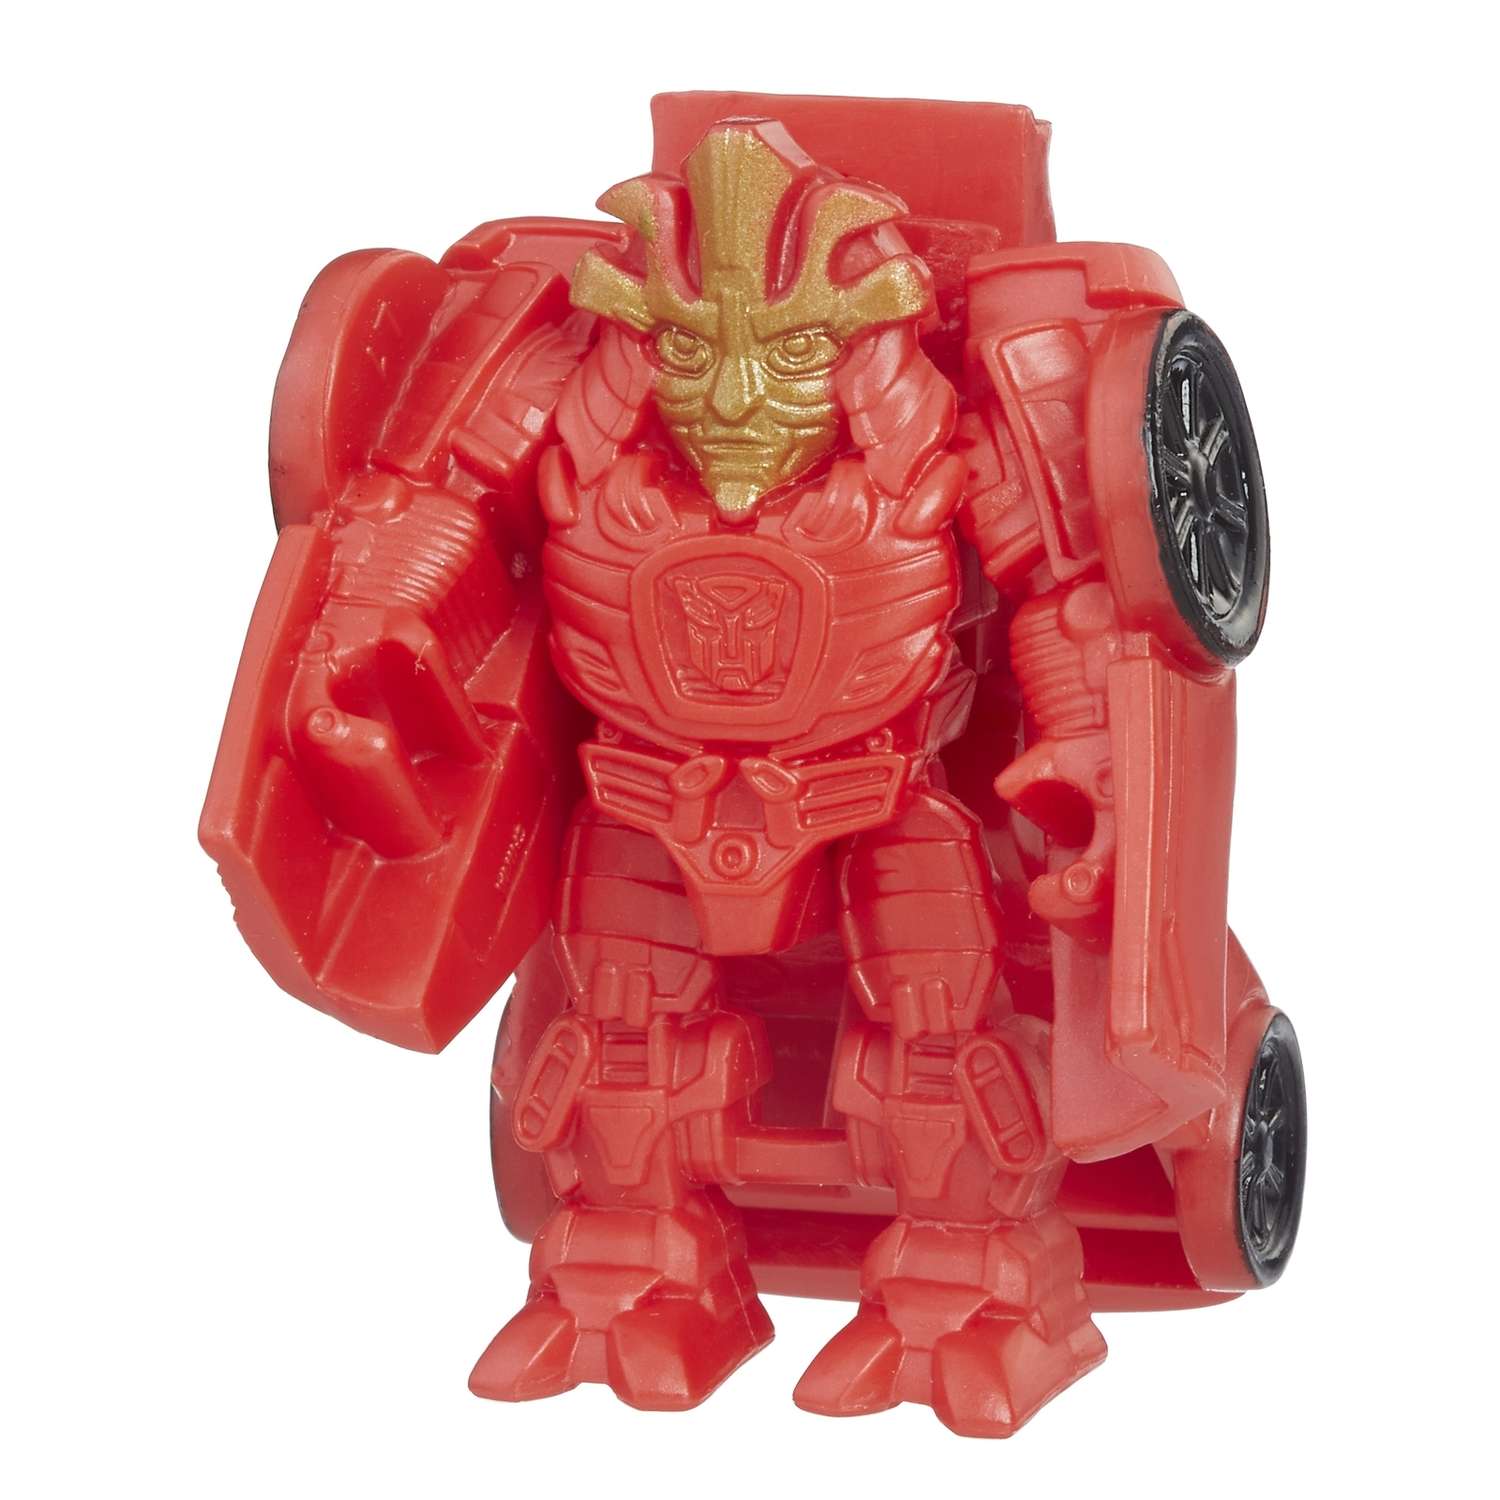 Transformers mini. Трансформер Hasbro Transformers c0882 5 мини-Титан. C0882 игрушка Hasbro Transformers трансформеры 5: мини-Титан. Мини трансформеры Хасбро. Трансформеры Hasbro 5 мини-Титан 1008086.